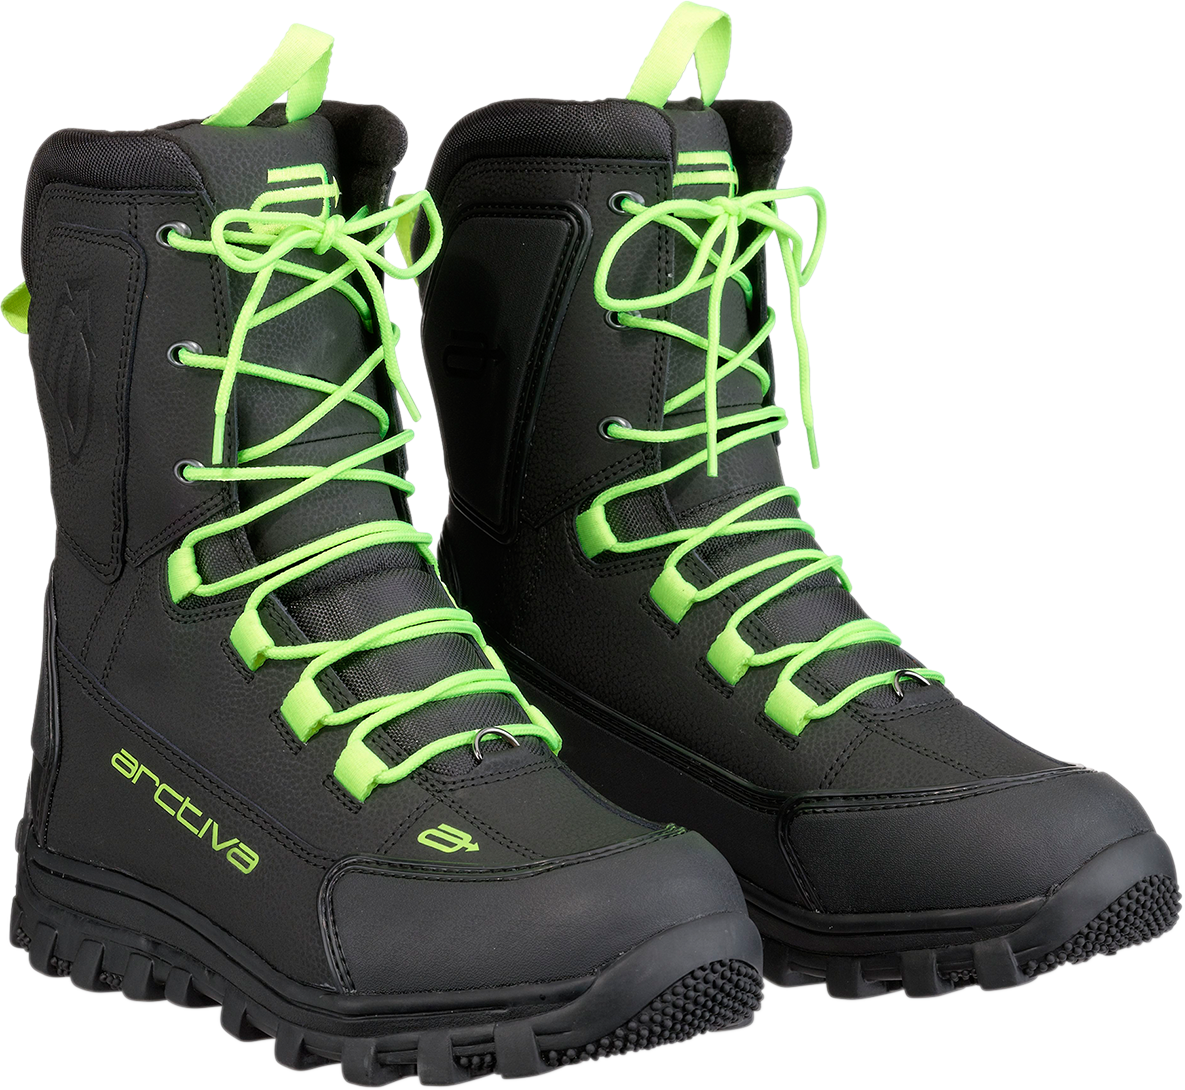 ARCTIVA Advance Boots - Black/Hi-Viz - Size 12 3420-0652